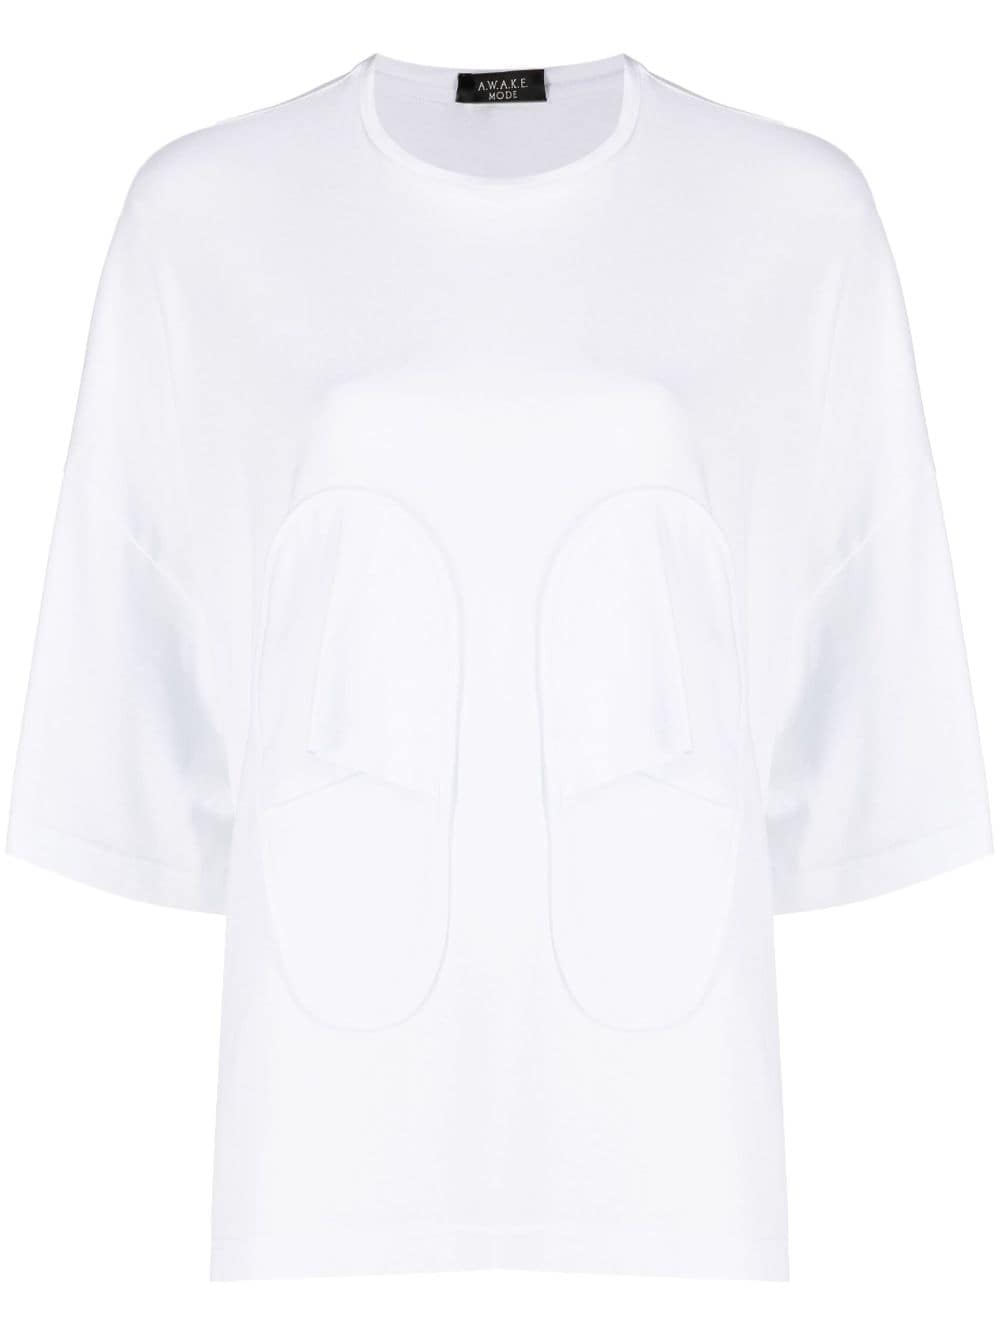 A.W.A.K.E. Mode T-Shirt aus Bio-Baumwolle mit Slipperdetail - Weiß von A.W.A.K.E. Mode